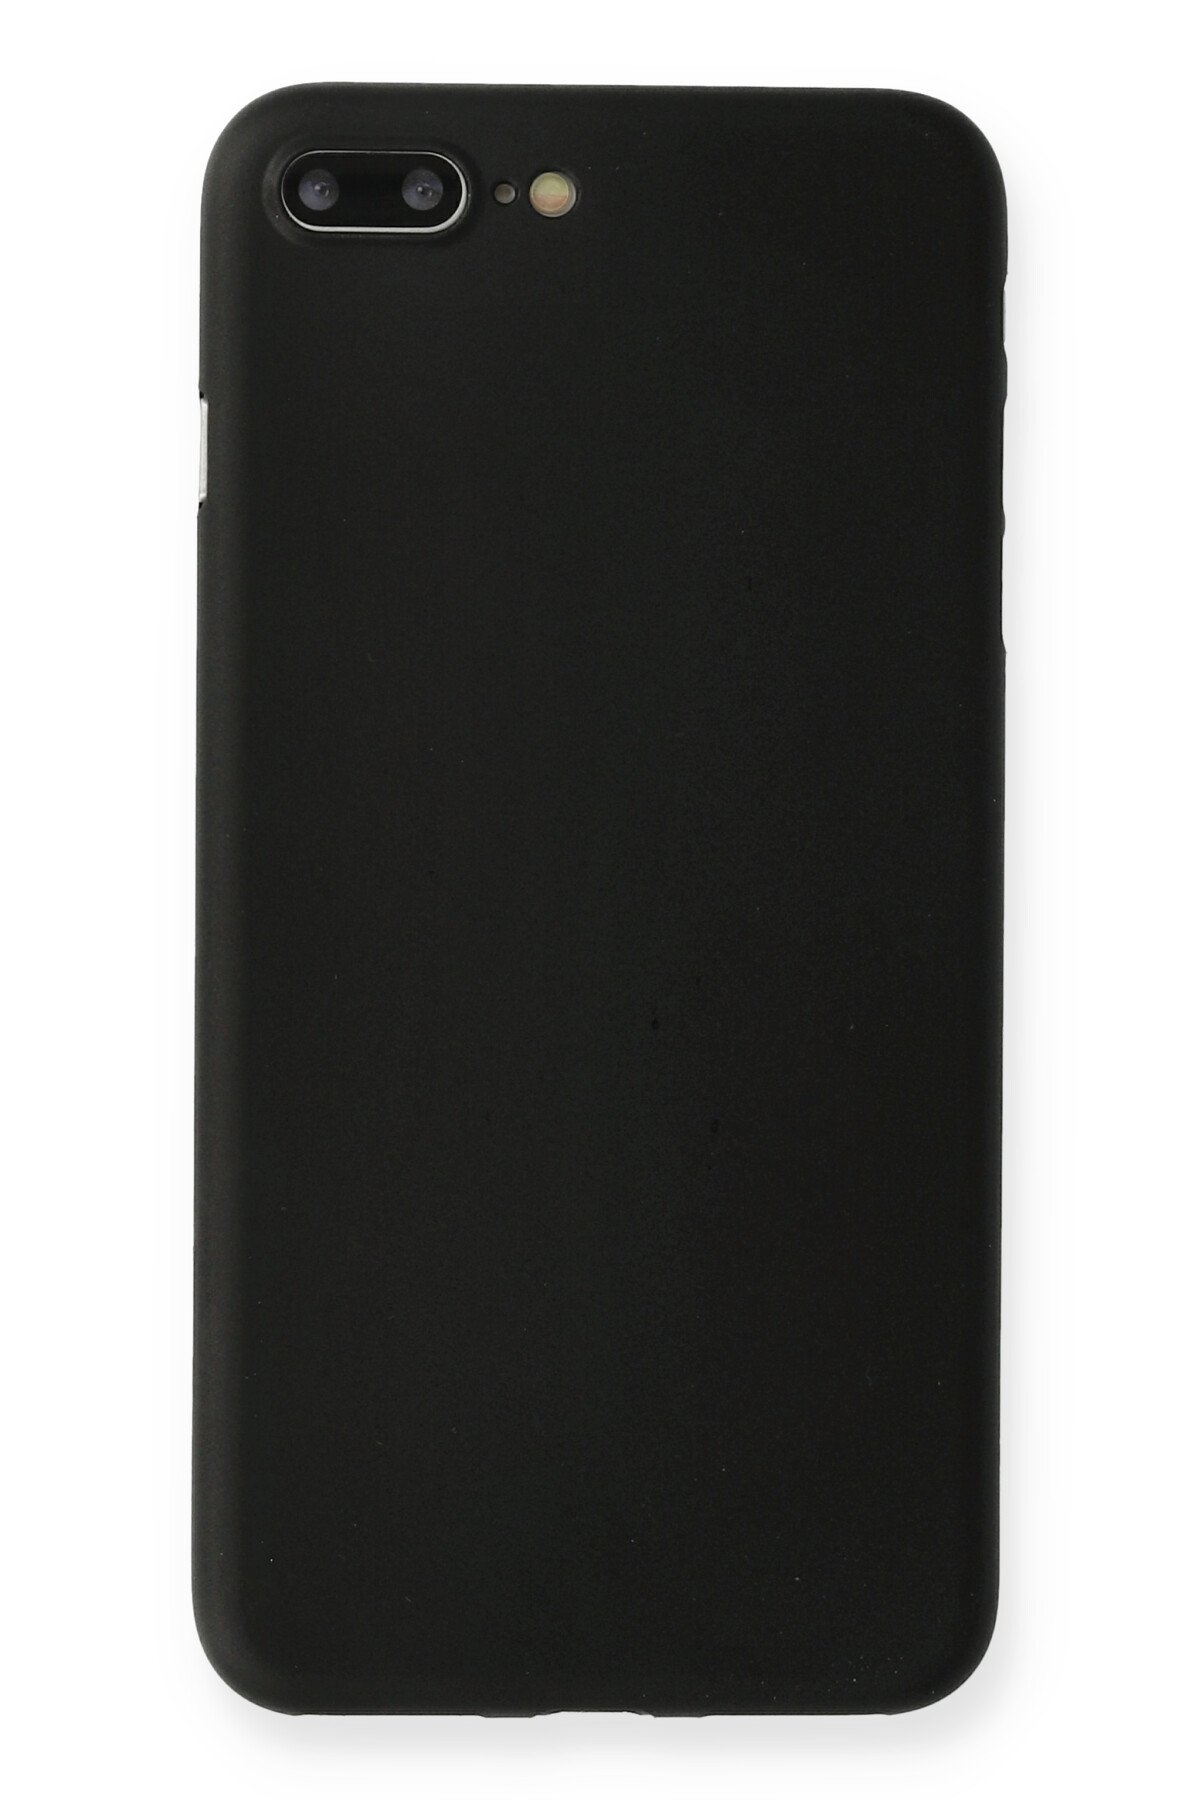 NewFace Newface iPhone 7 Plus Kılıf PP Ultra İnce Kapak - Siyah